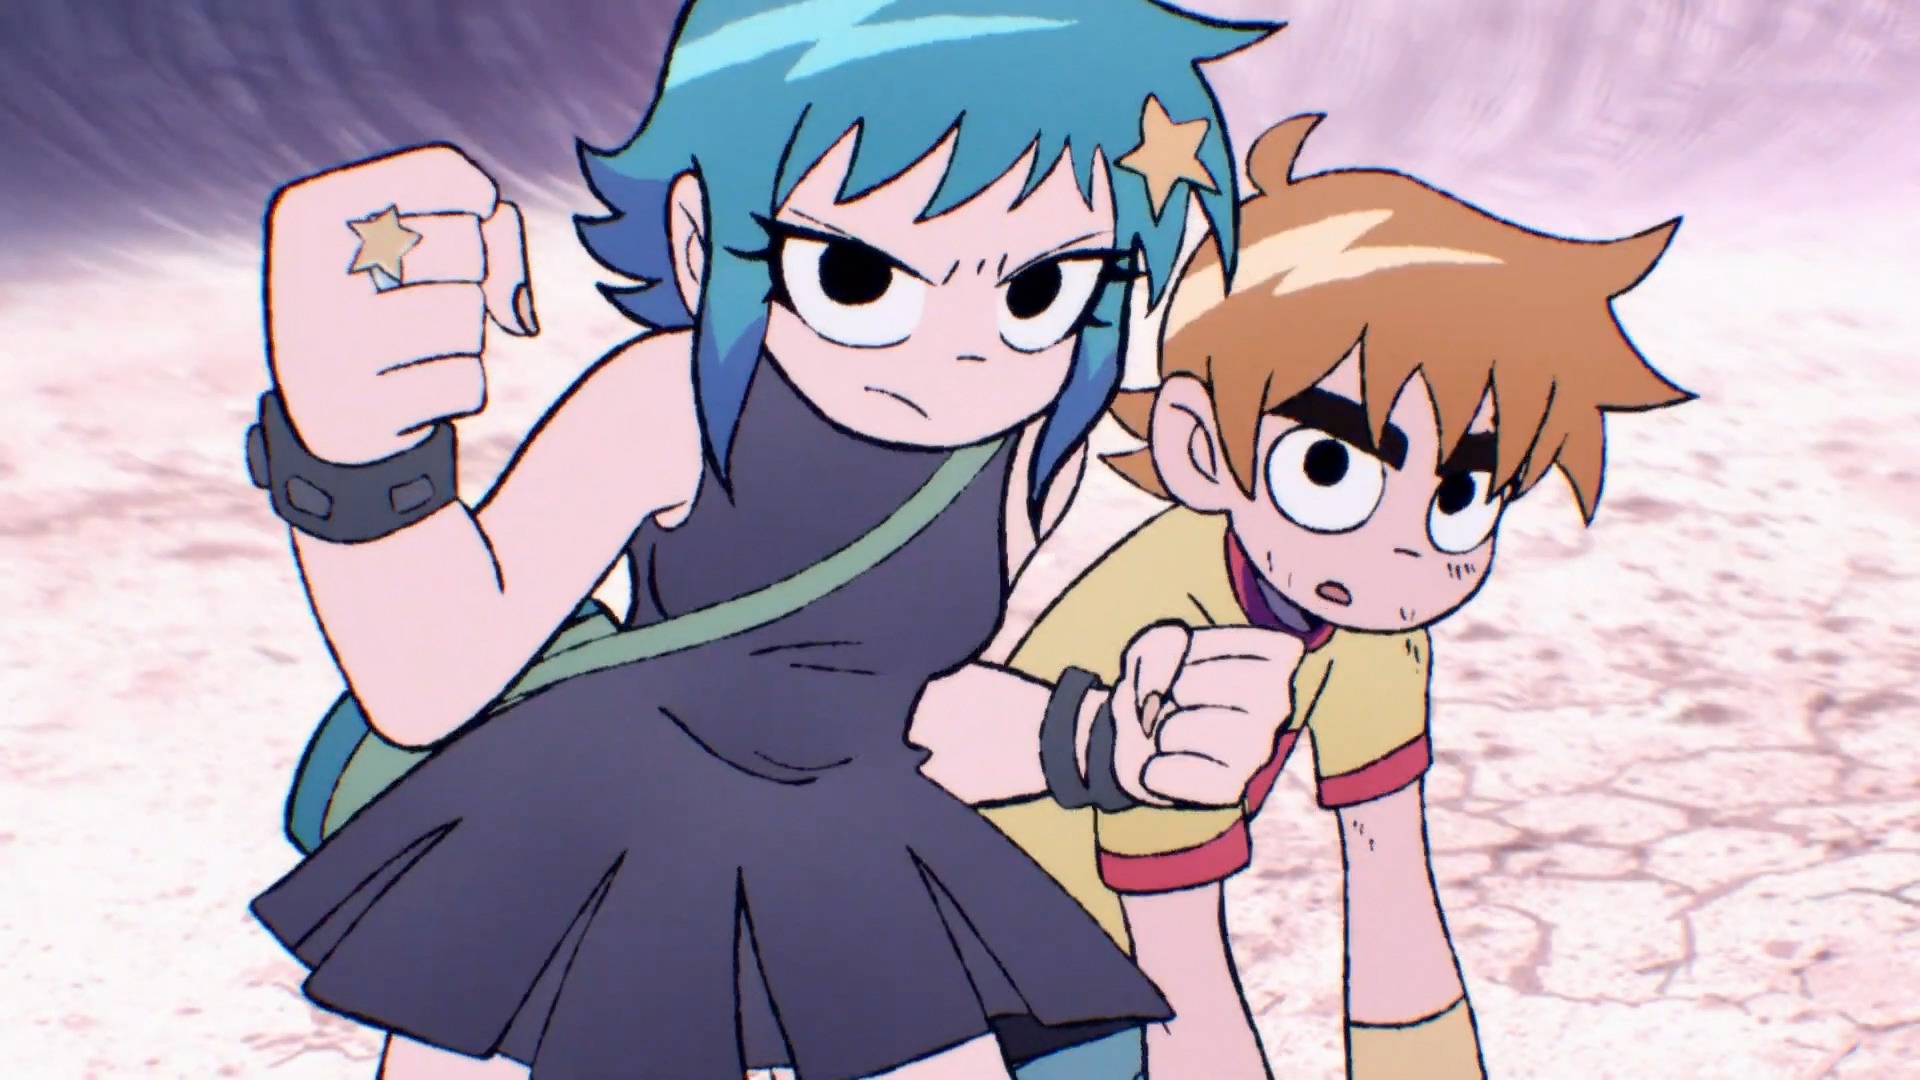 Scott Pilgrim Anime Gets a Teaser and a Name - Anime Fire